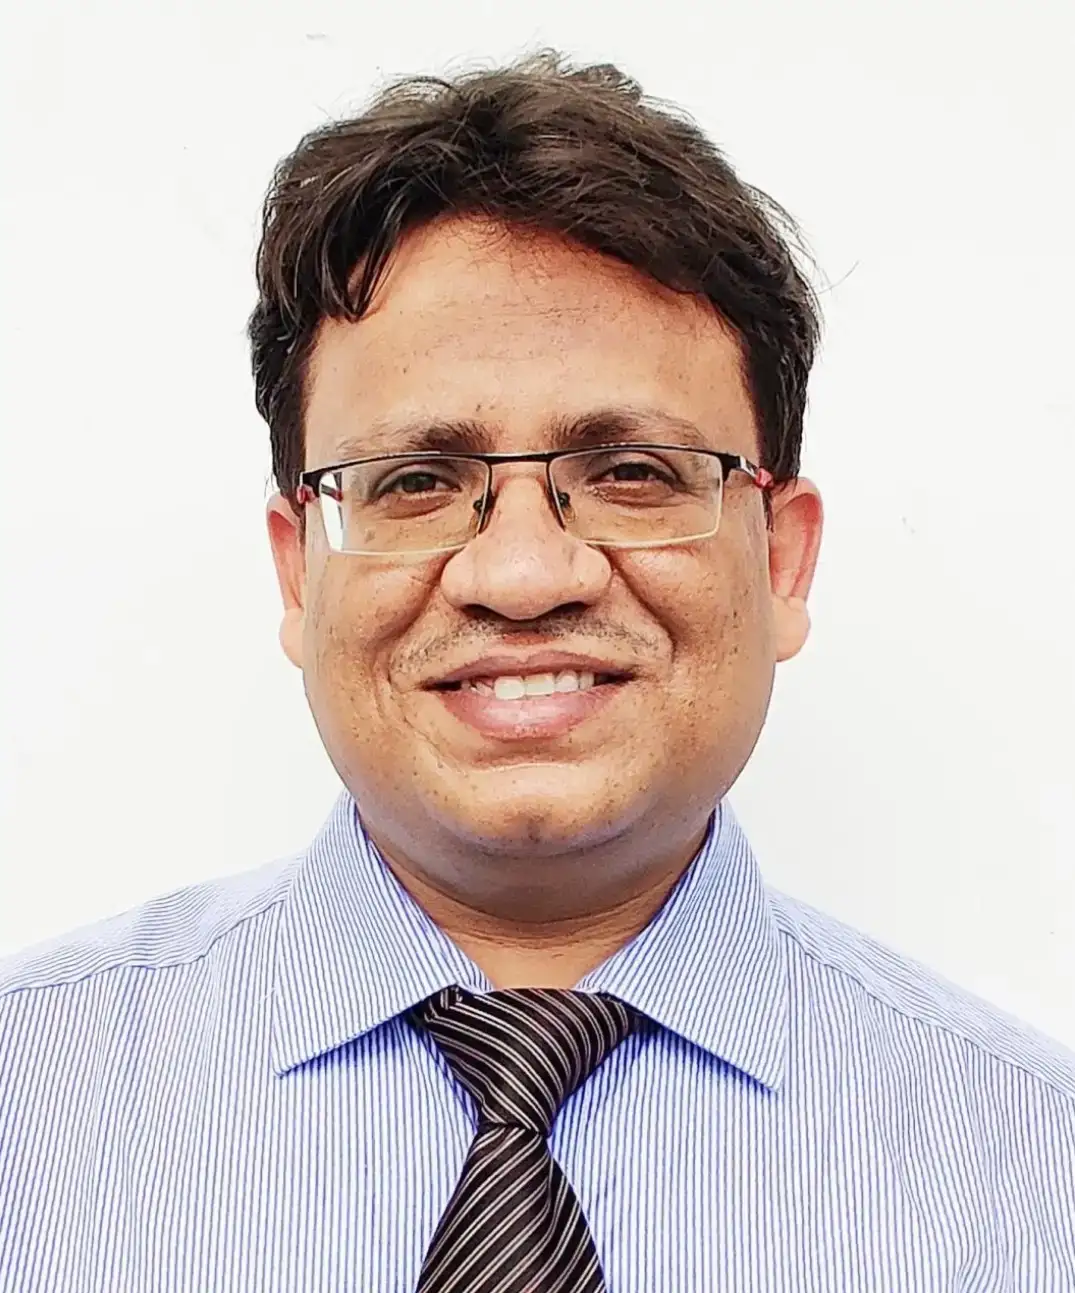 Prof. Ashutosh Pandey